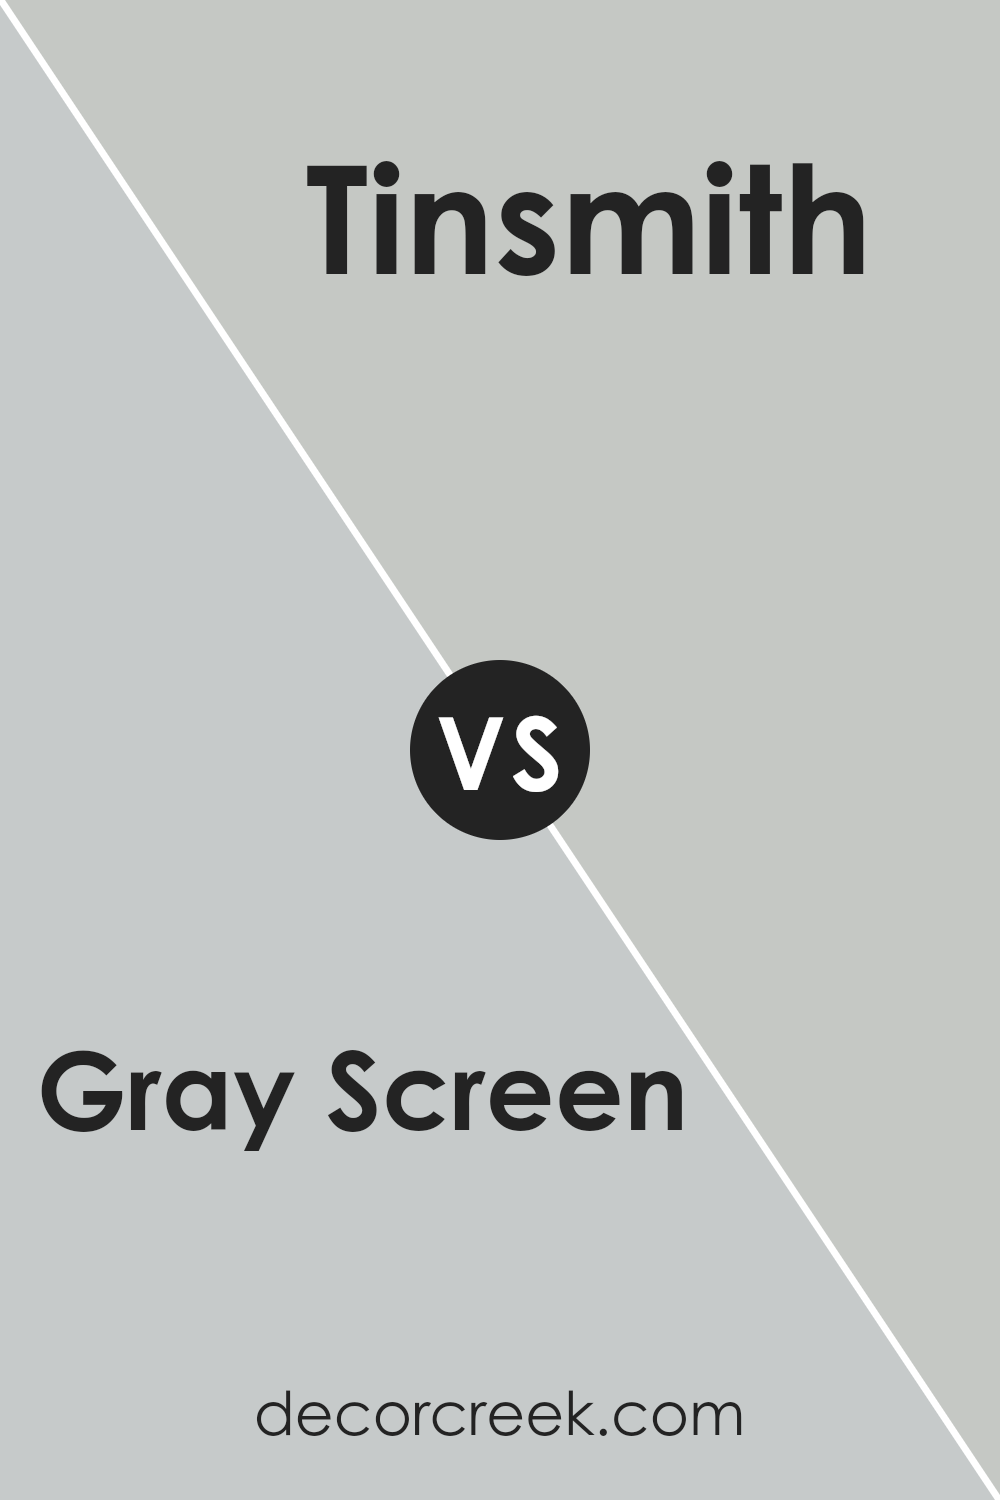 gray_screen_sw_7071_vs_tinsmith_sw_7657